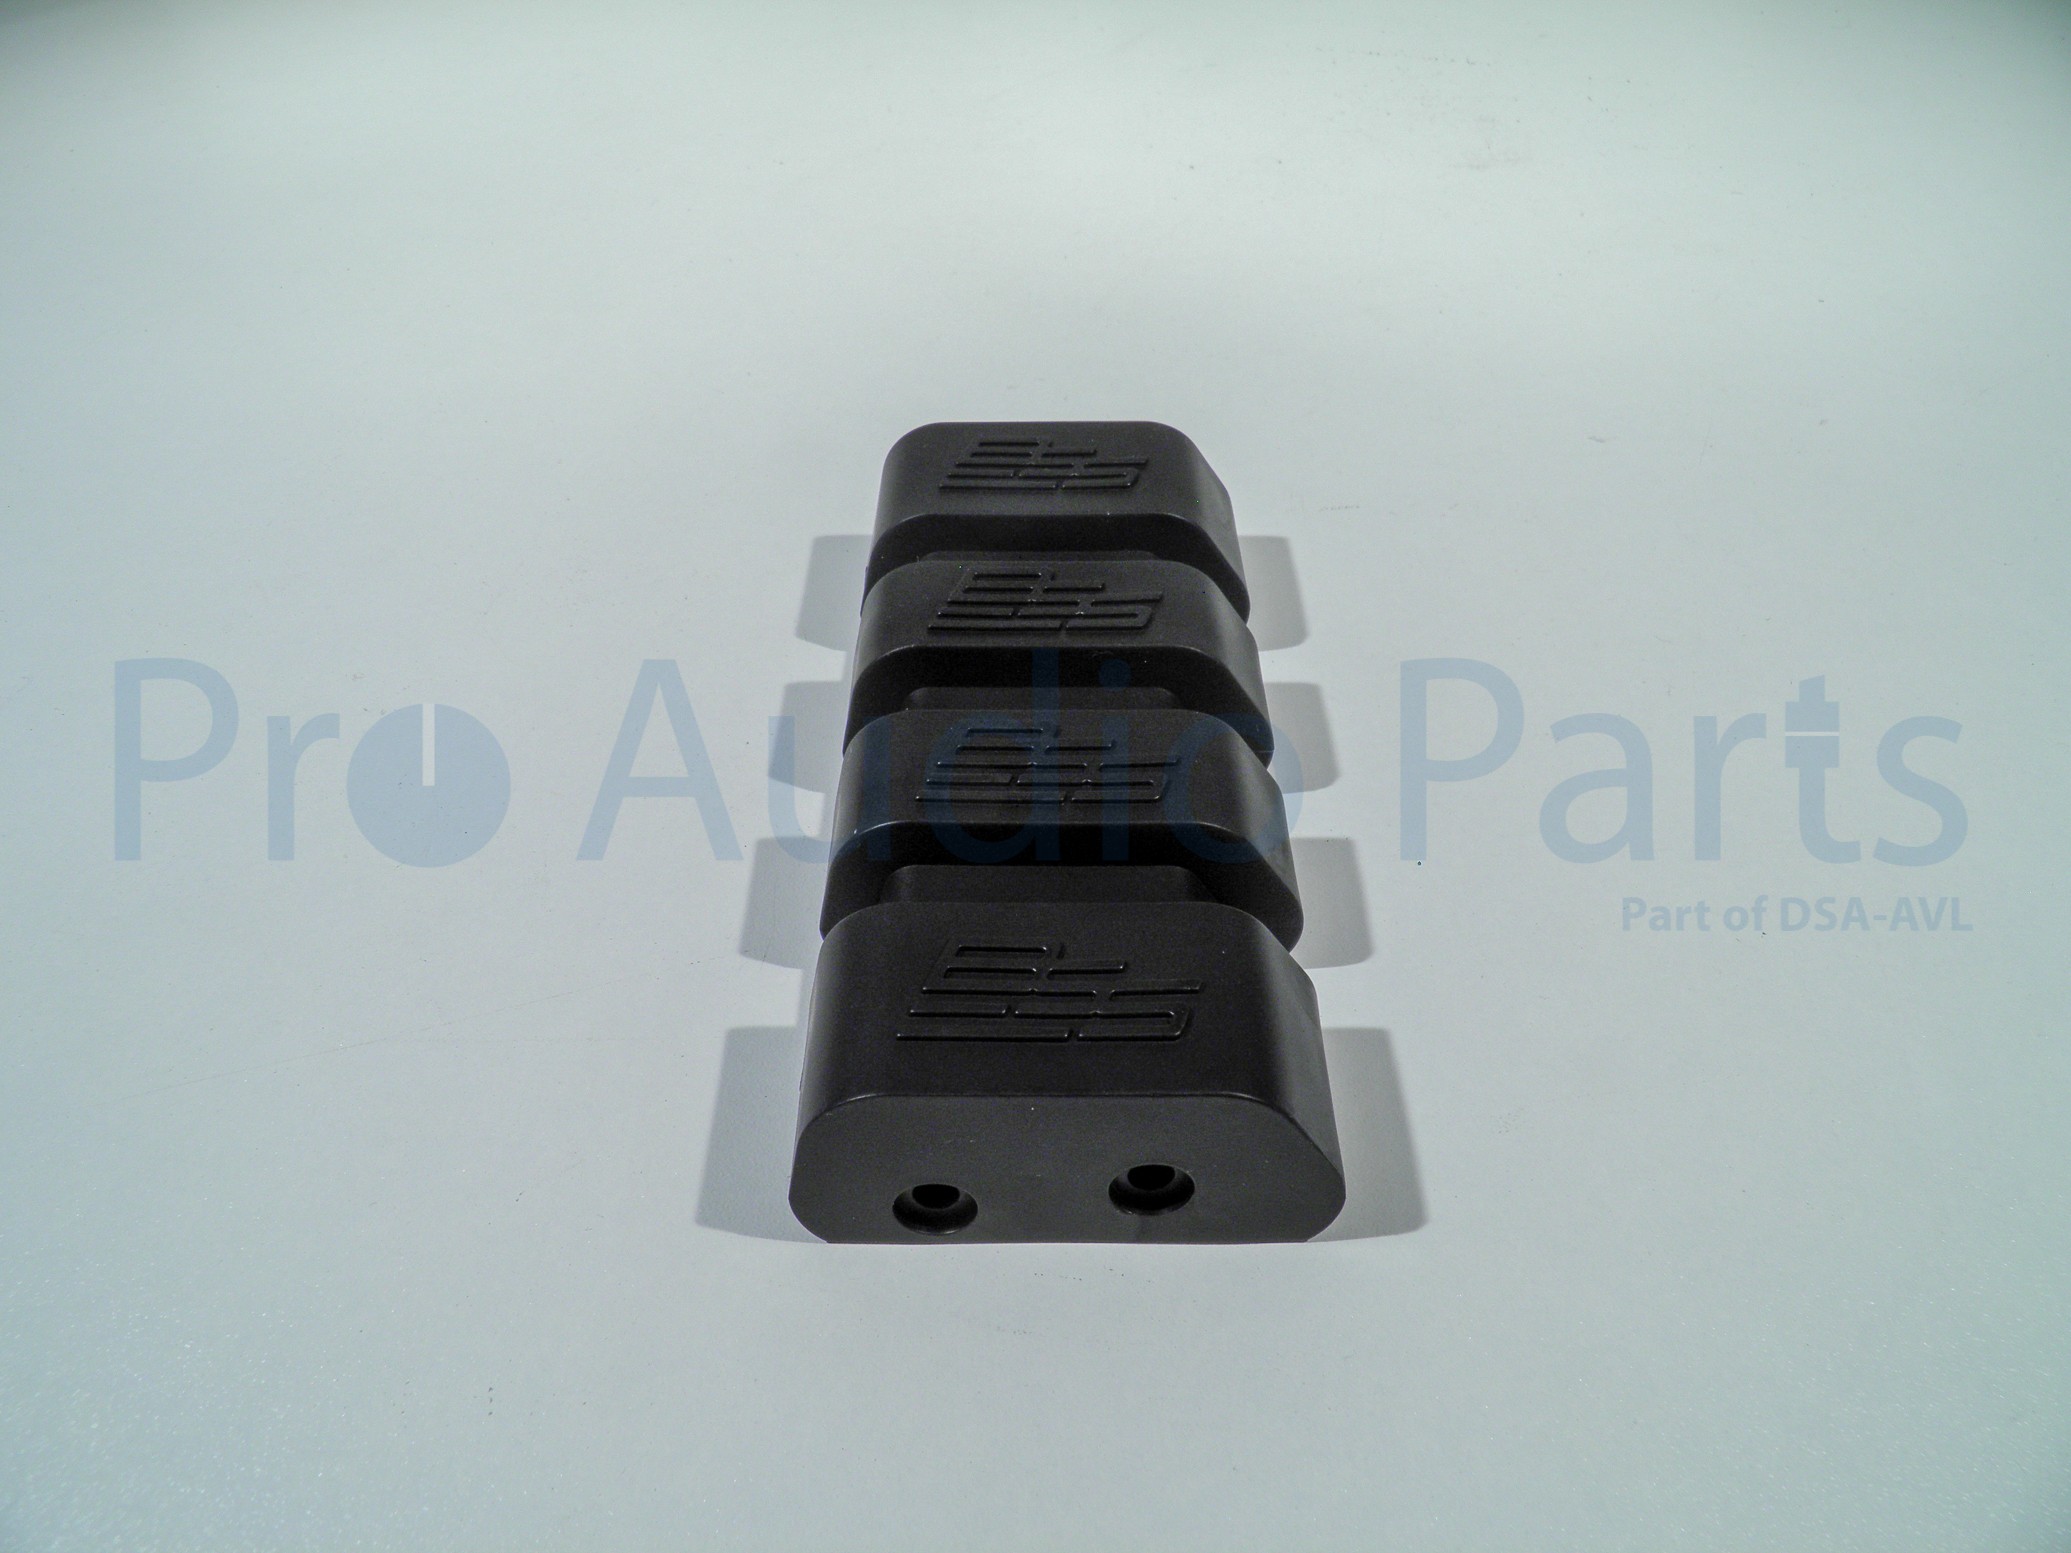 P-B133E-01 – Rubber feet for AR-133 → Pro Audio Parts